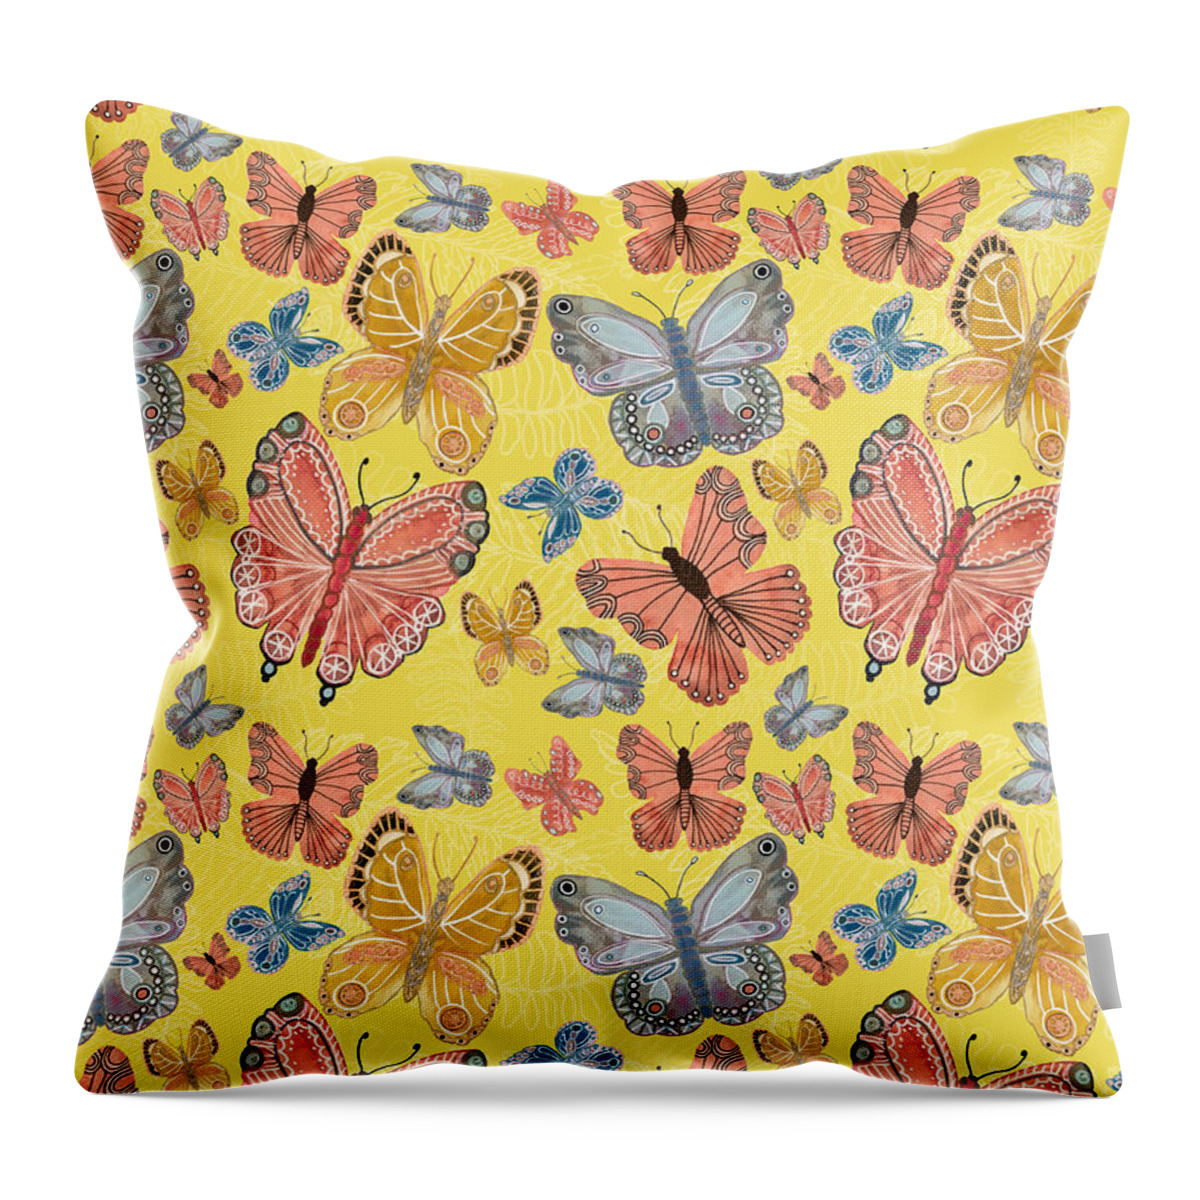 Butterflies Throw Pillow featuring the mixed media Butterflies Are Free by Blenda Studio